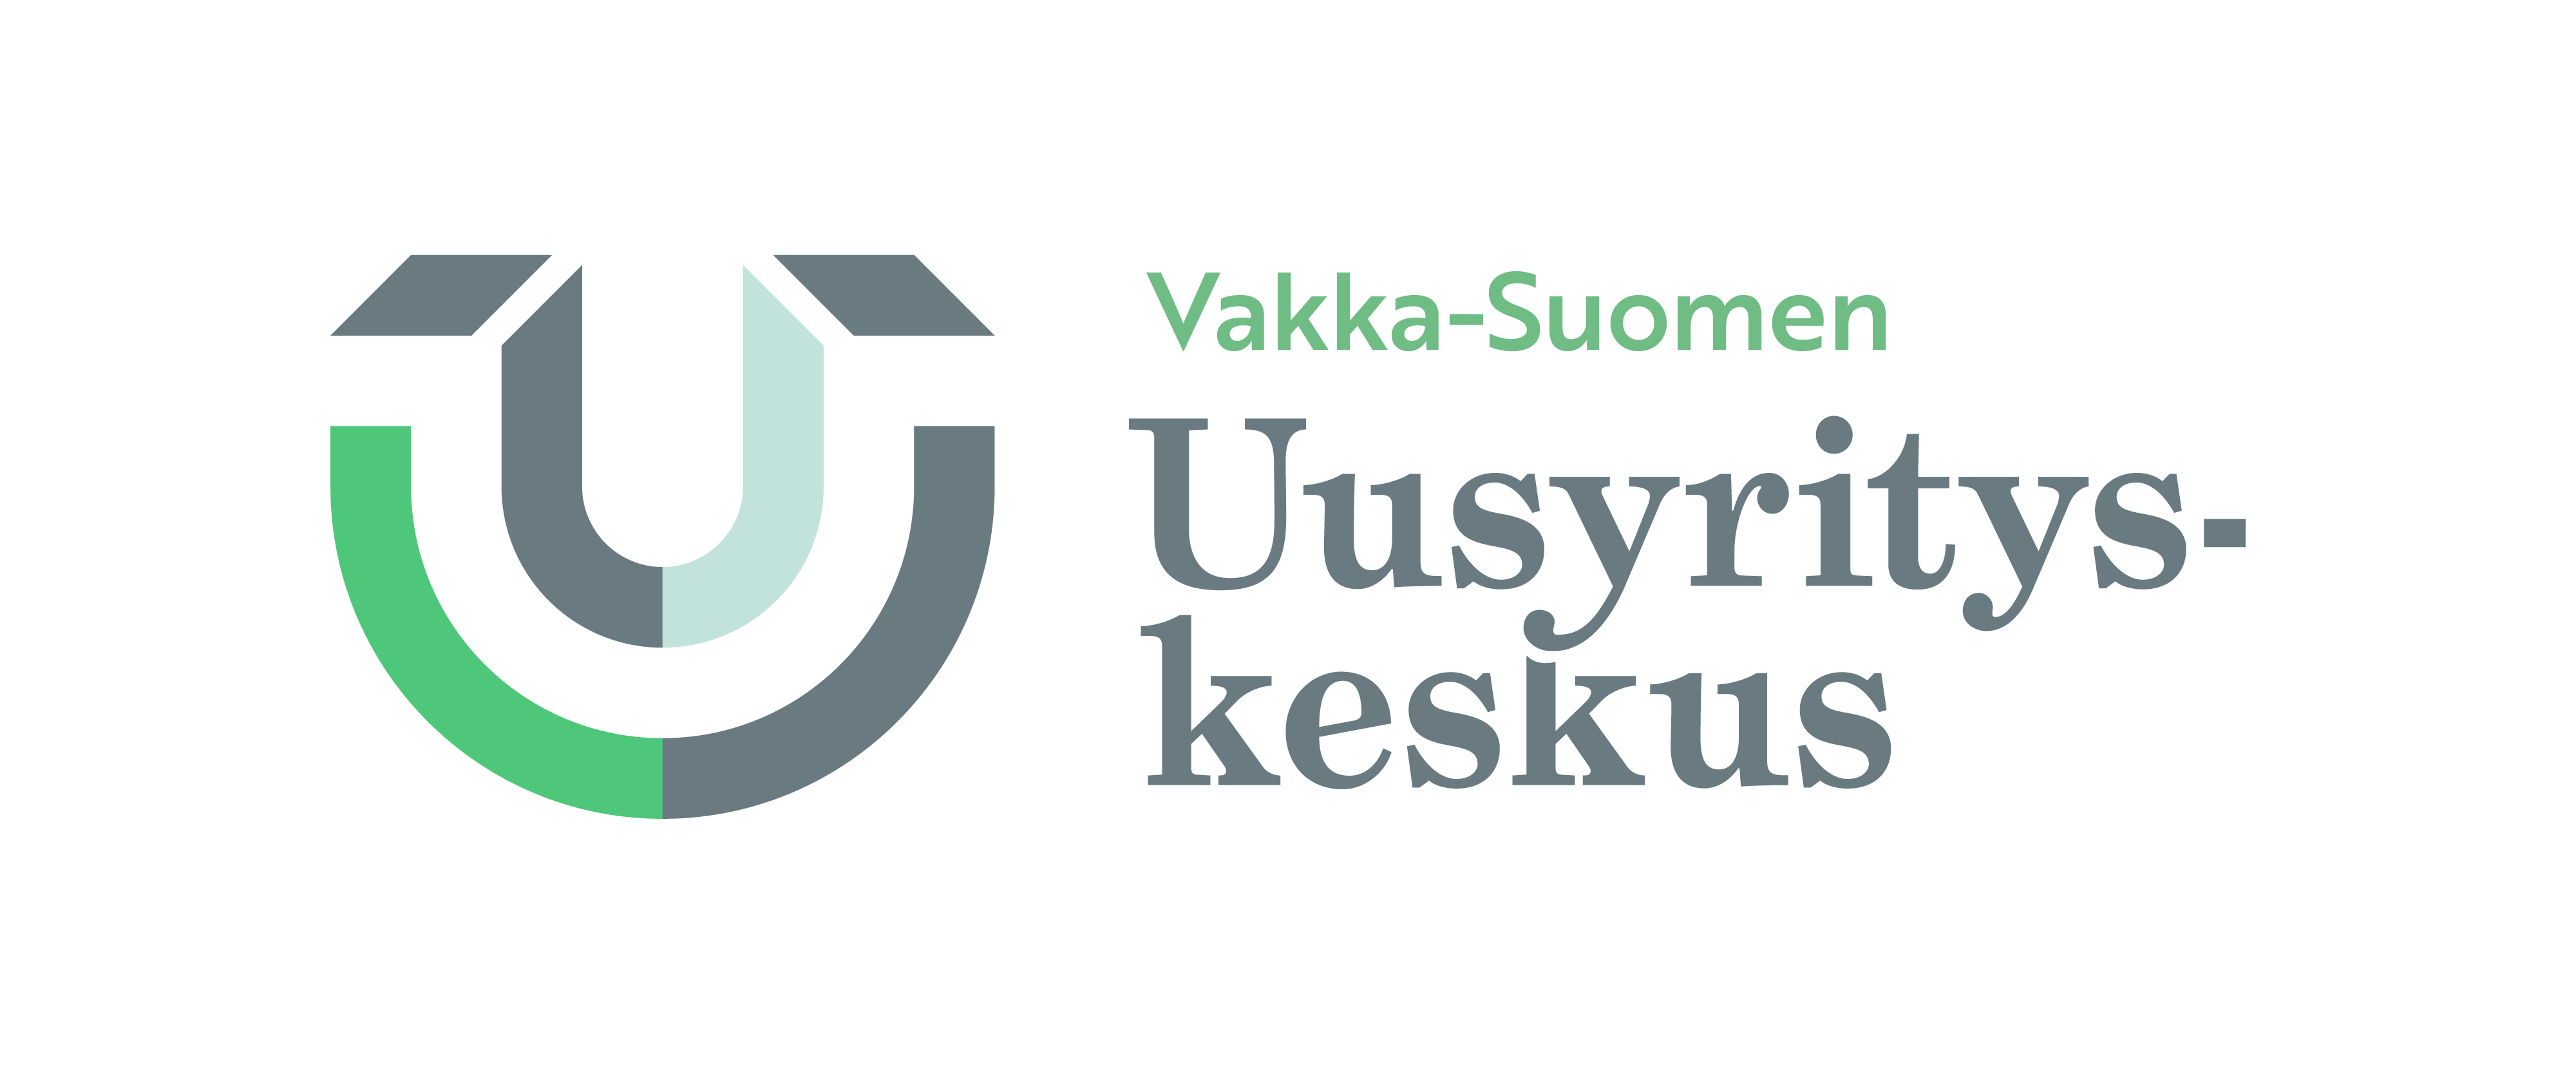 Vakka-Suomen-uusyrityskeskus-logo_rgb.jpg